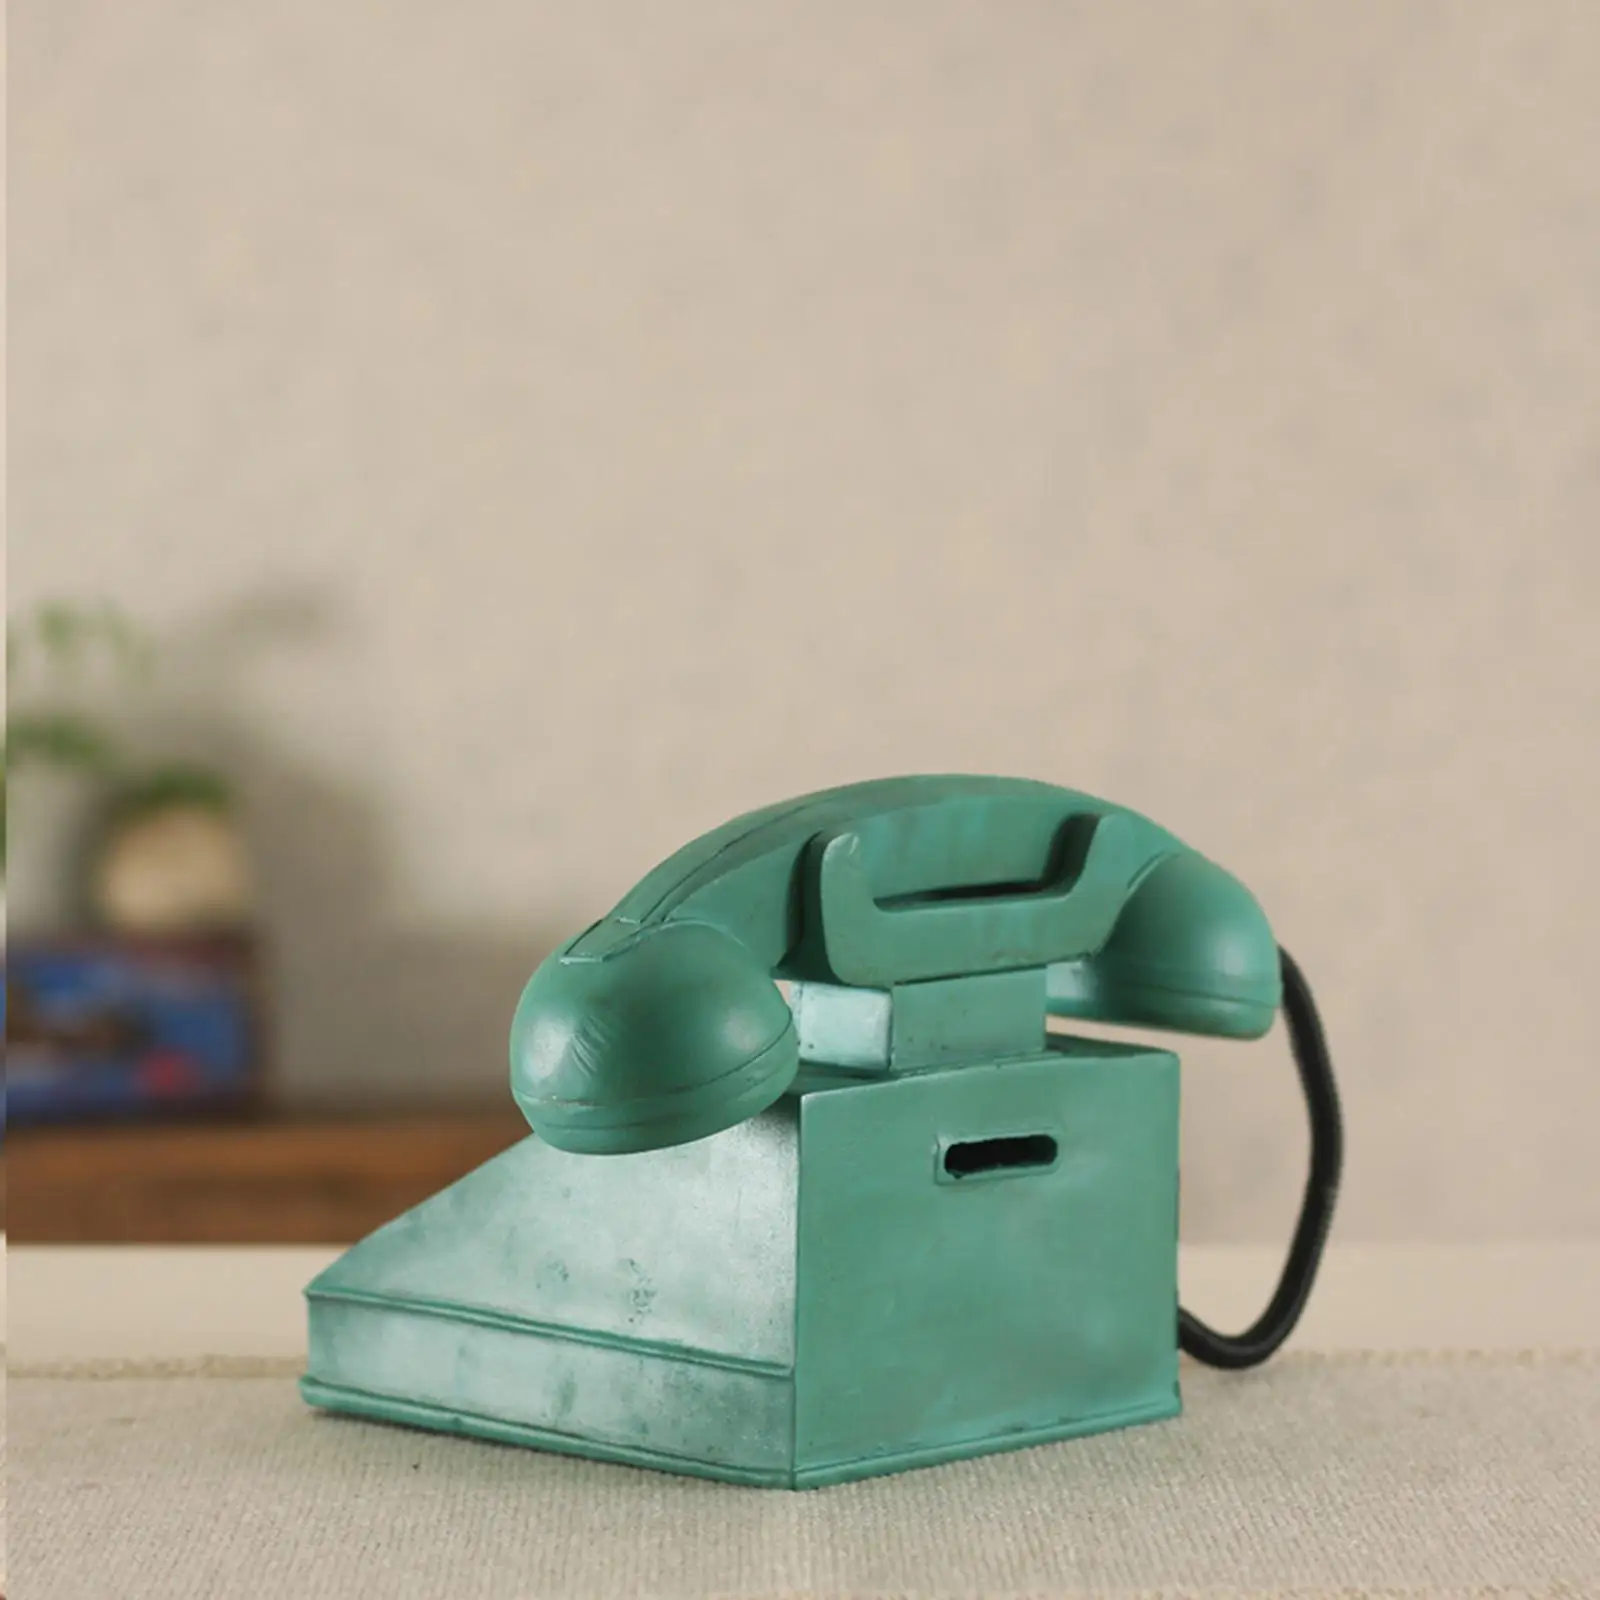 Retro Style American Telephone Model Figurine Resin Craft for Desk Bedroom Home